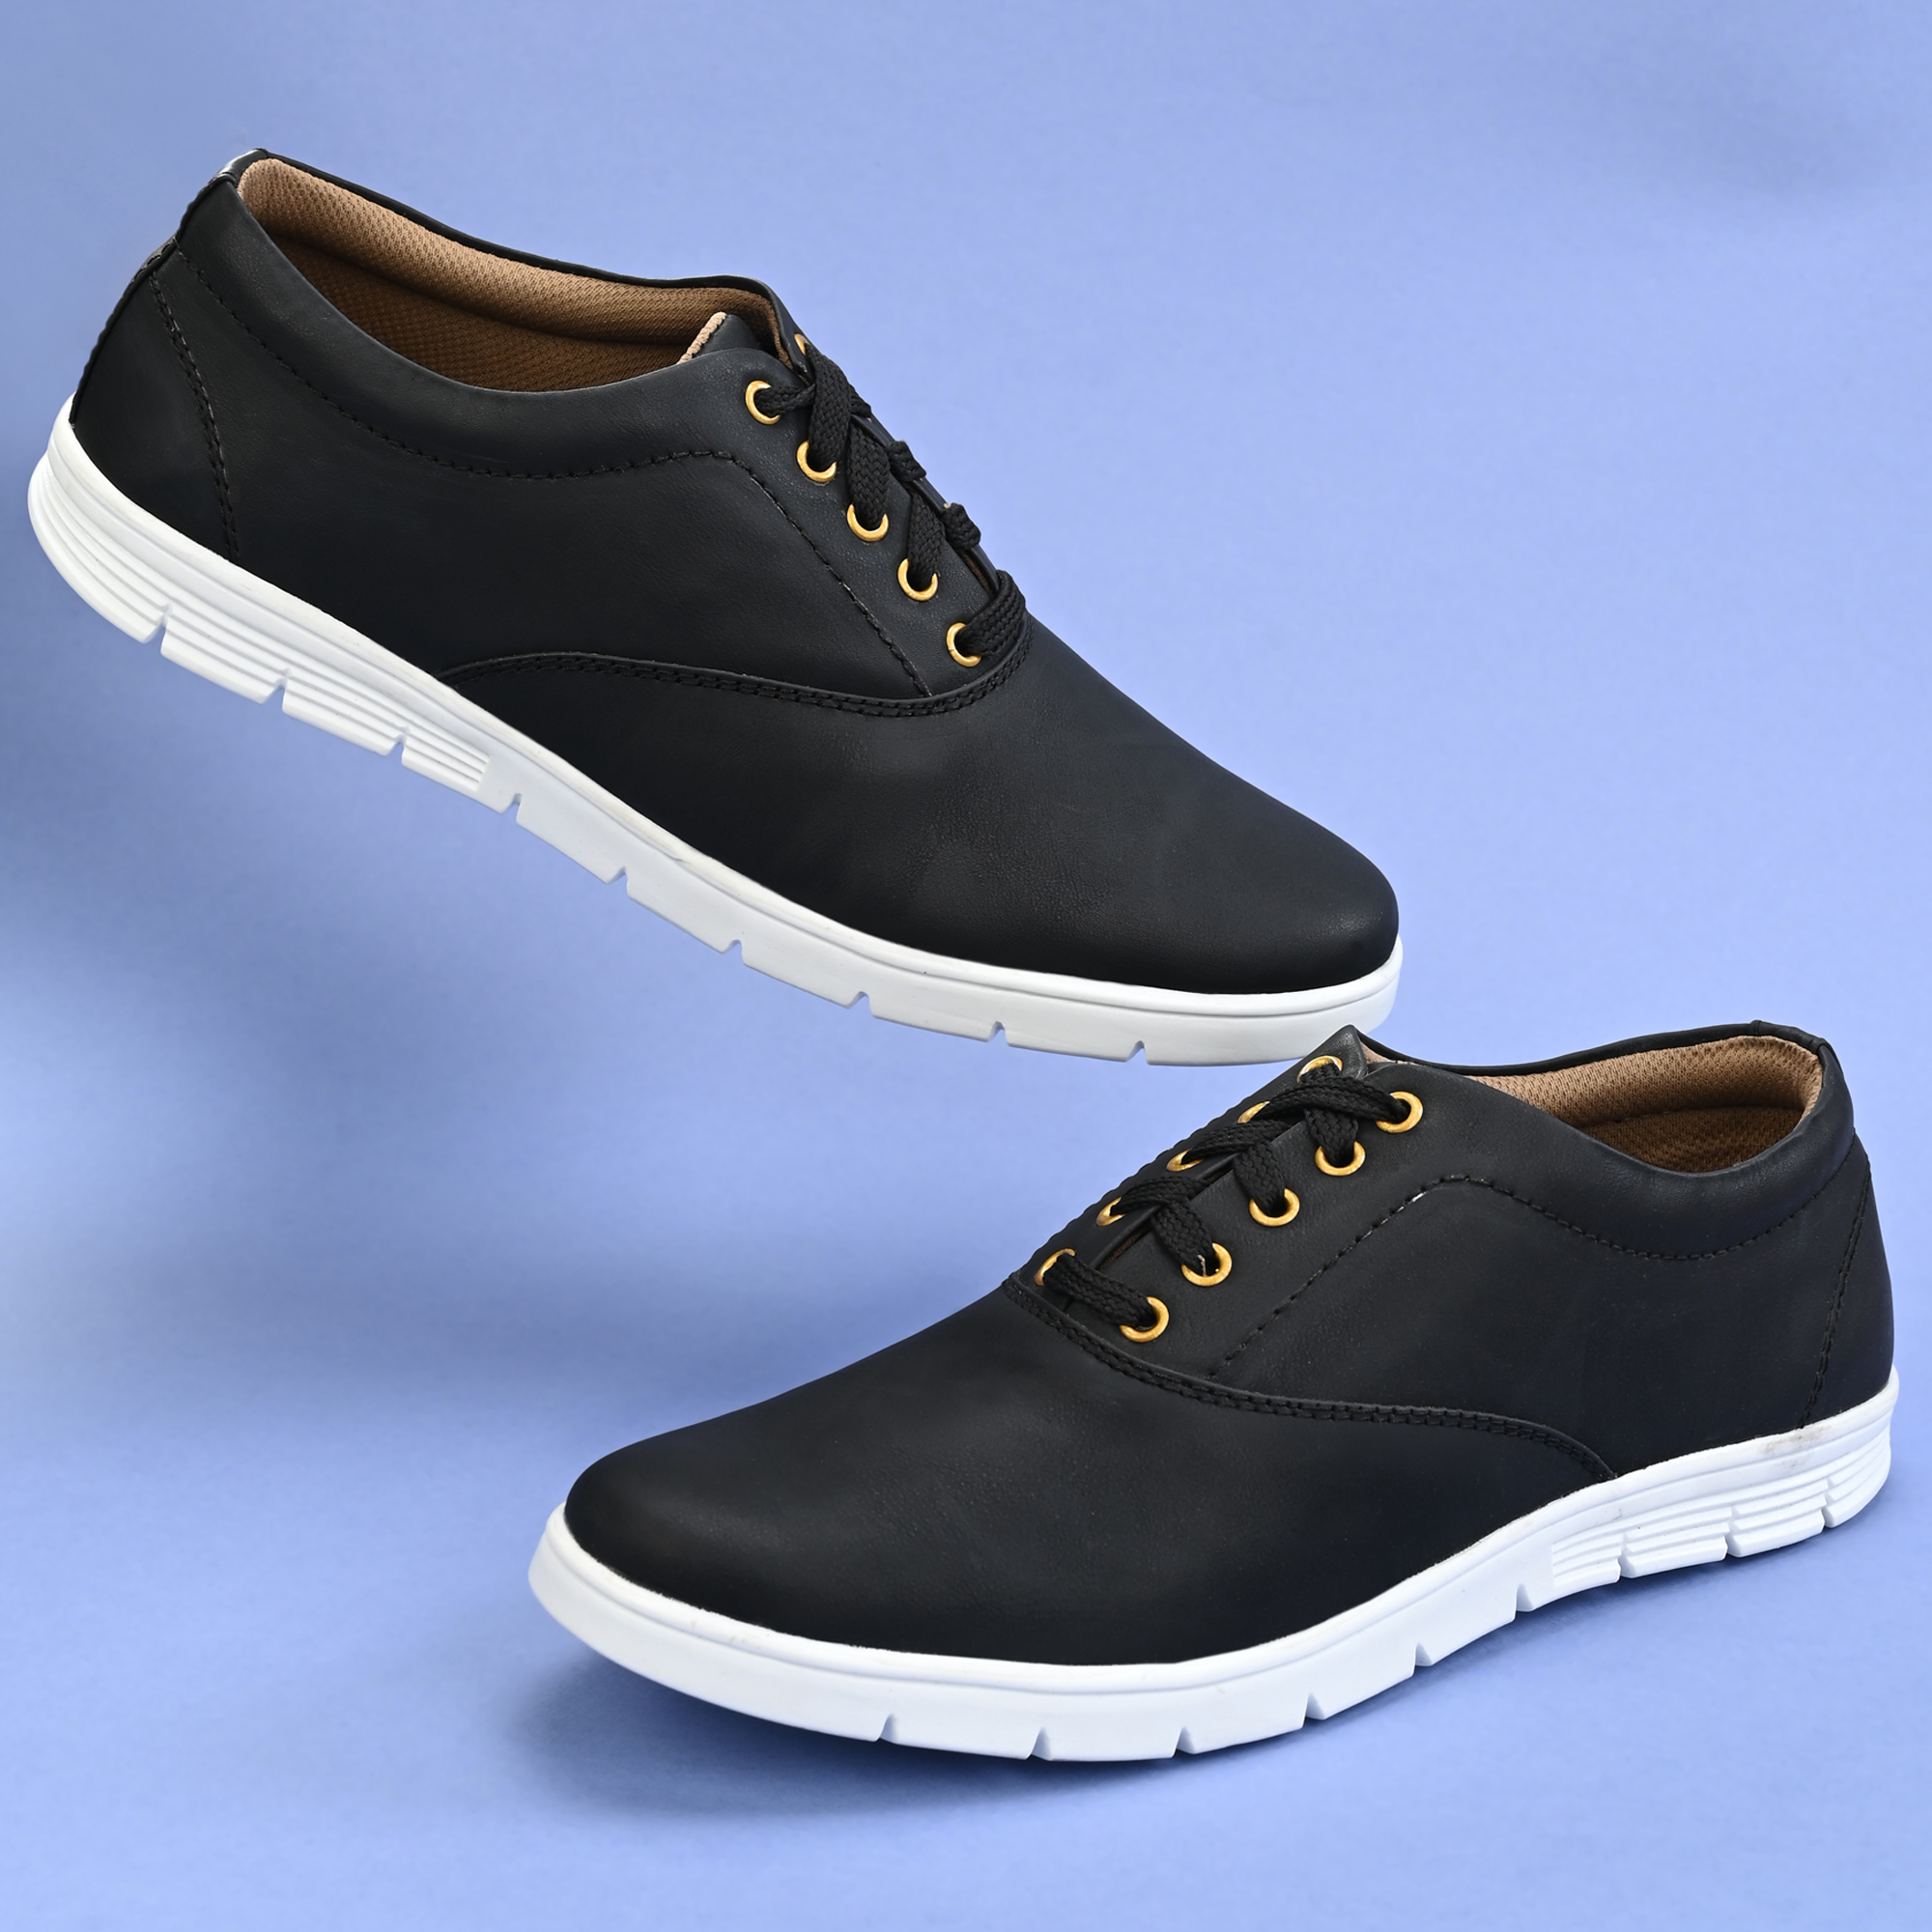 Groofer Men's Tan Smart casual Sneakers Shoes